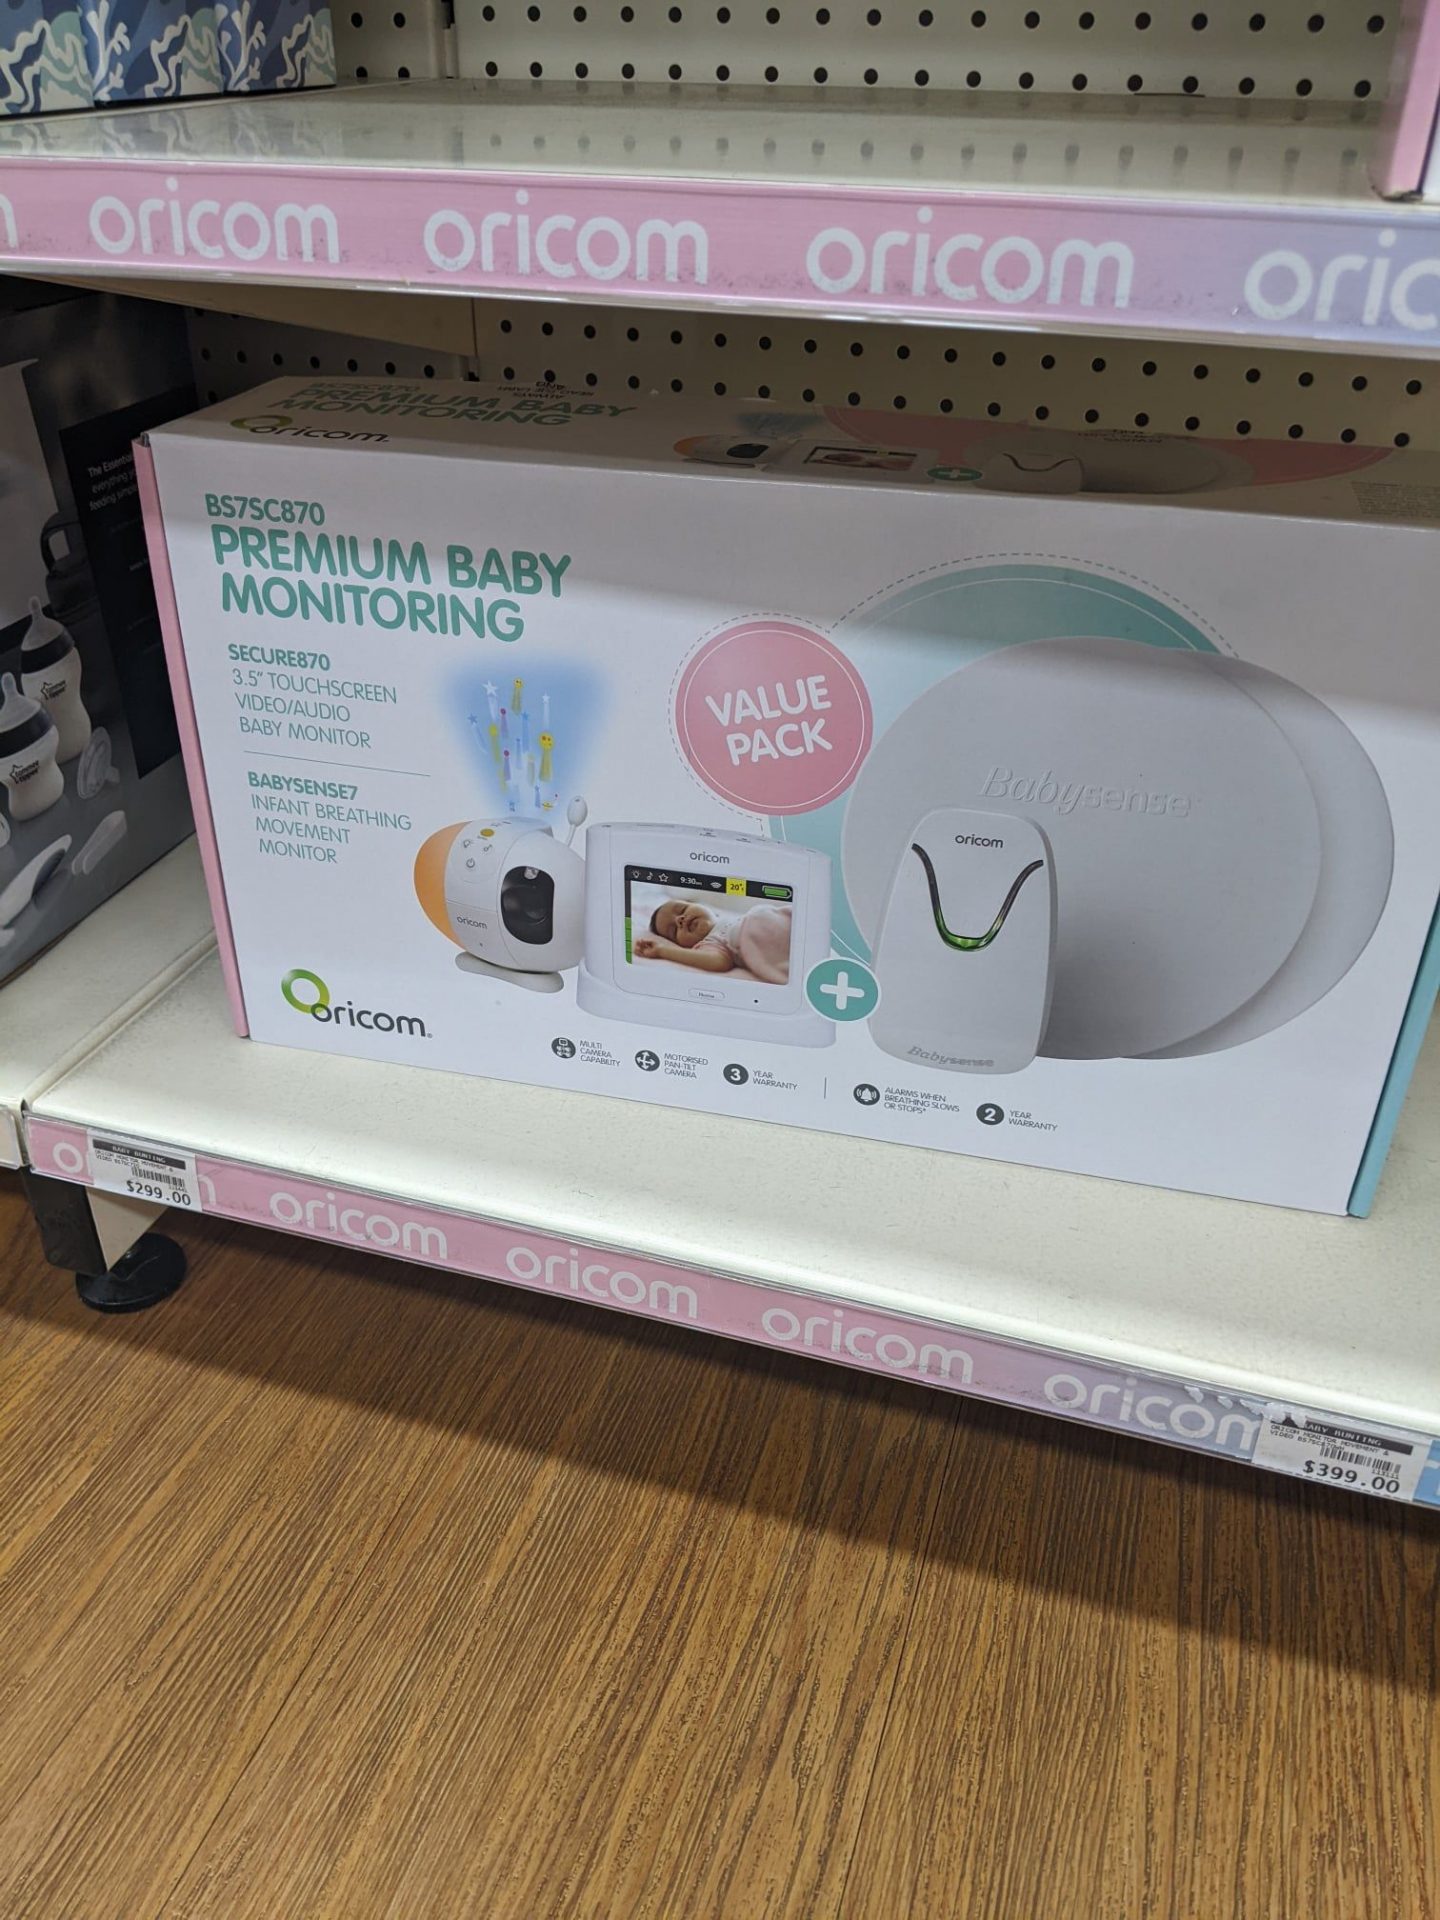 Premium Baby Monitoring with sensor discs